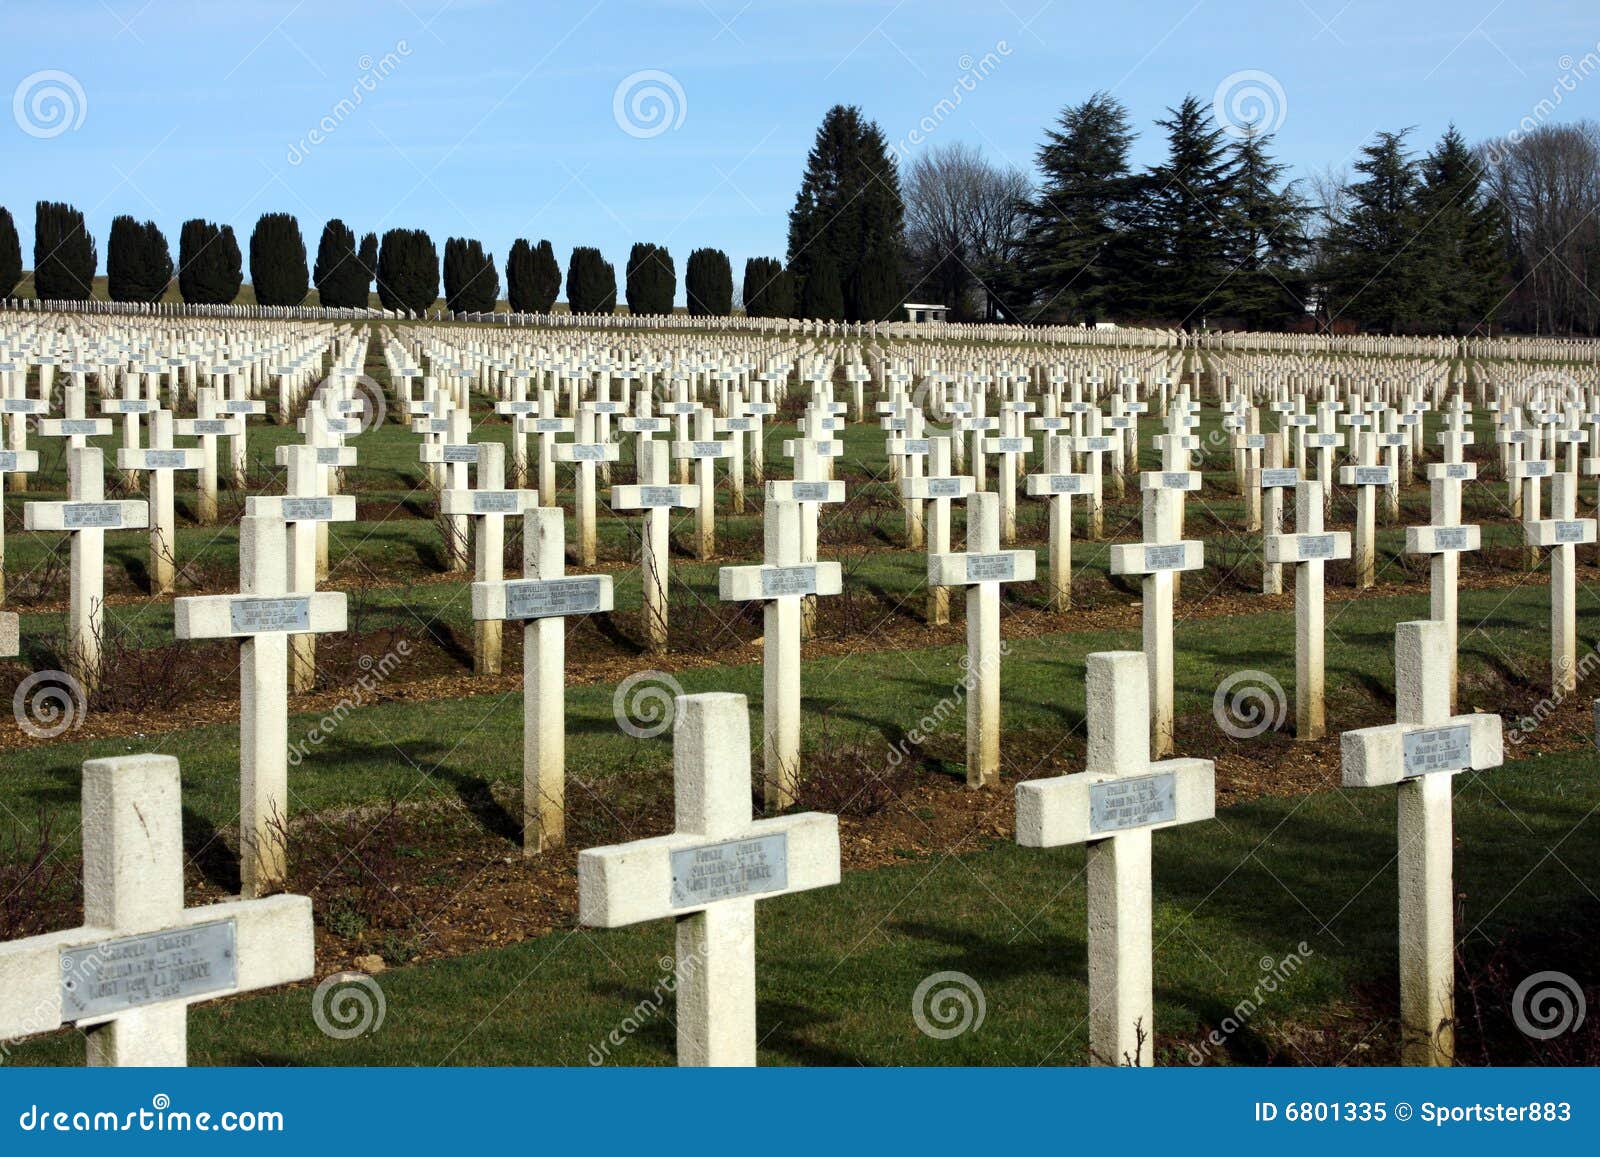 First World War Cemetery Verdun Stock Image Image Of Grave - 